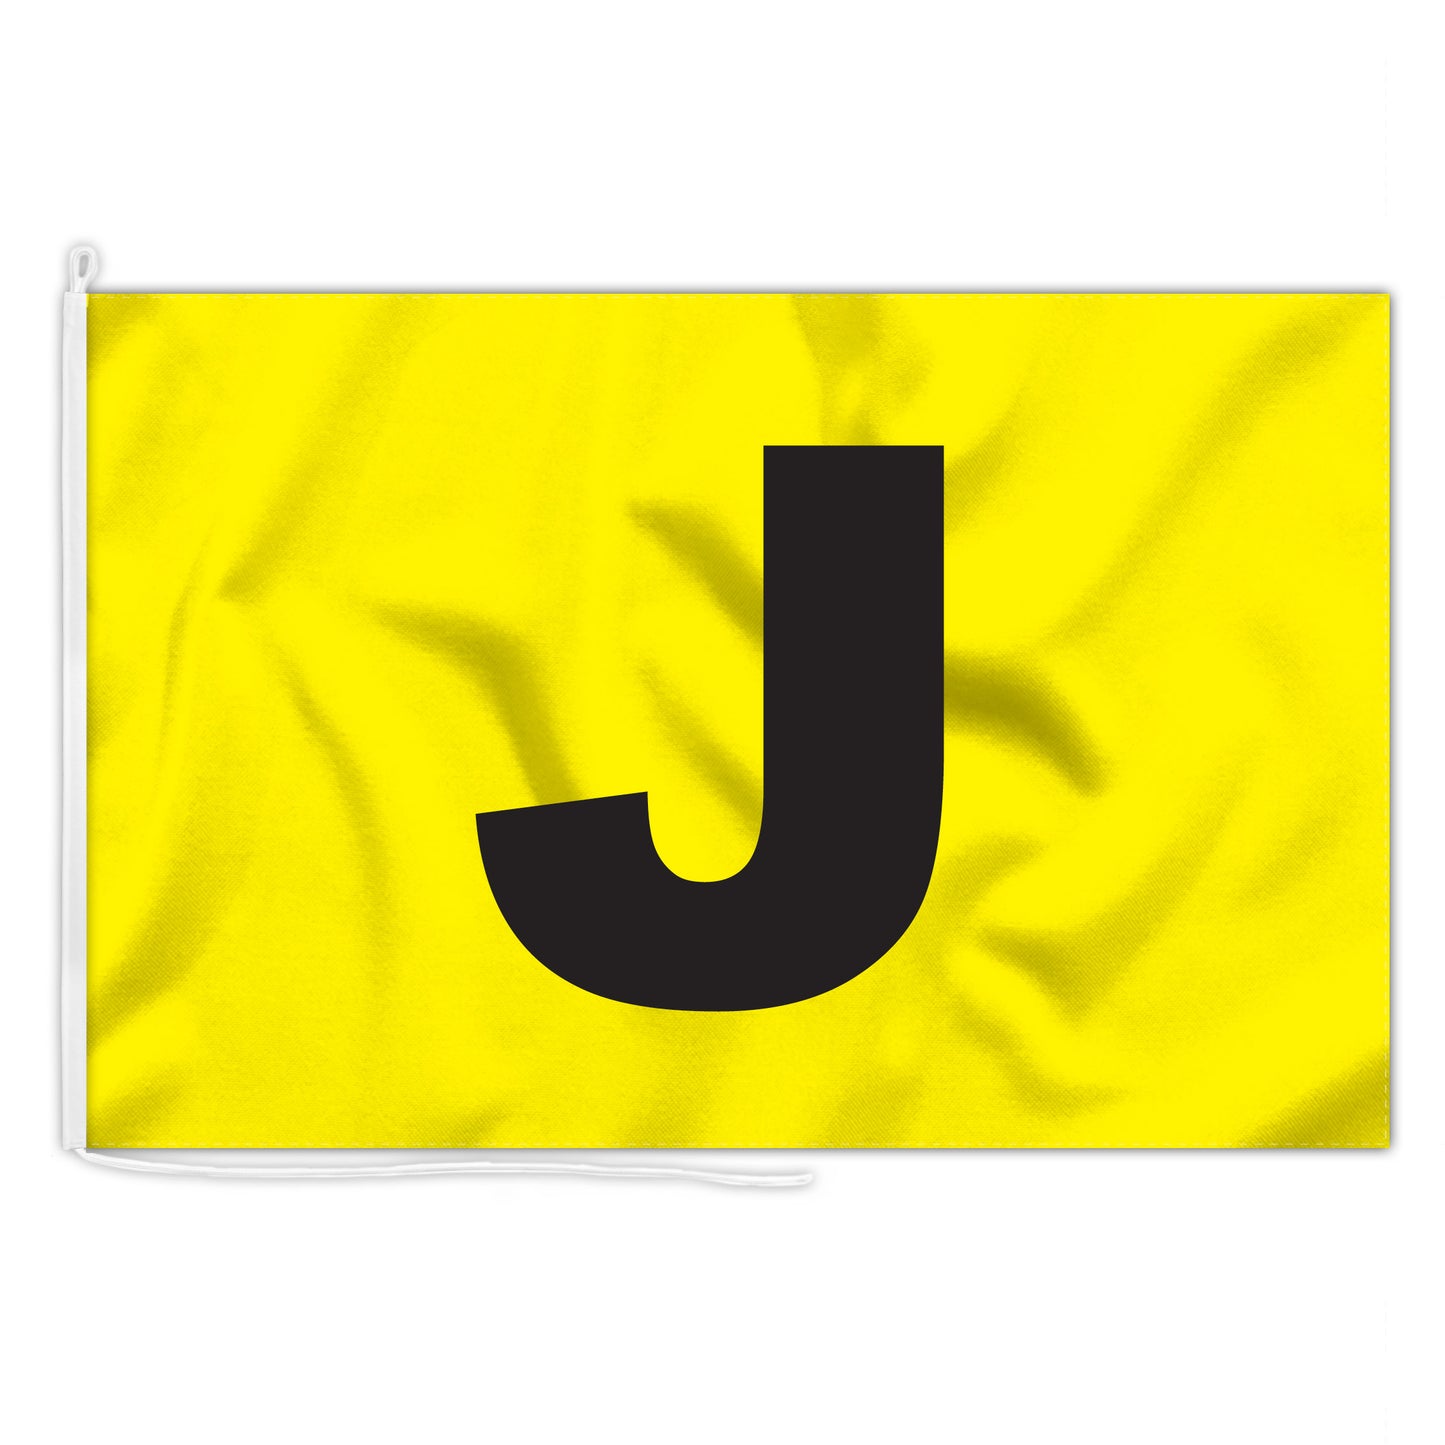 Regatta flag - JURY or REFEREE